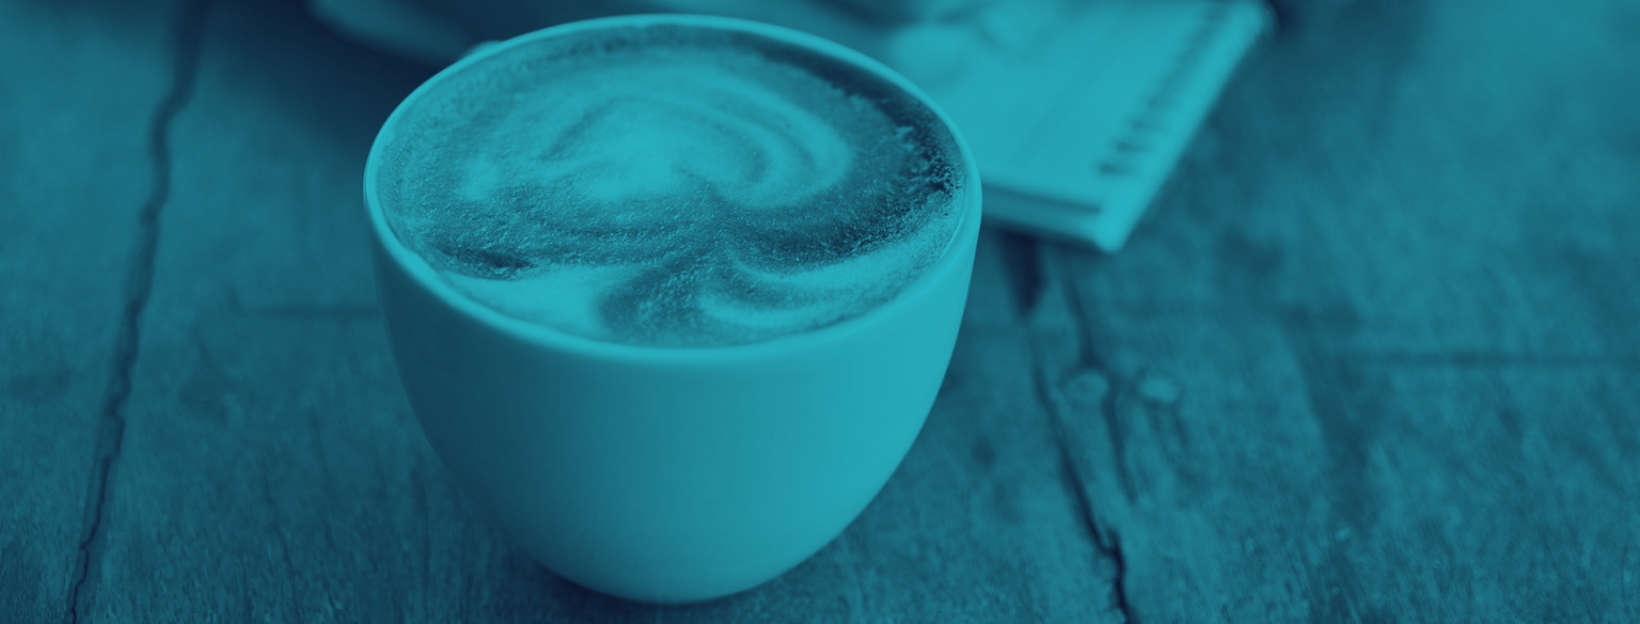 Do Coffee Drinkers Live Longer?